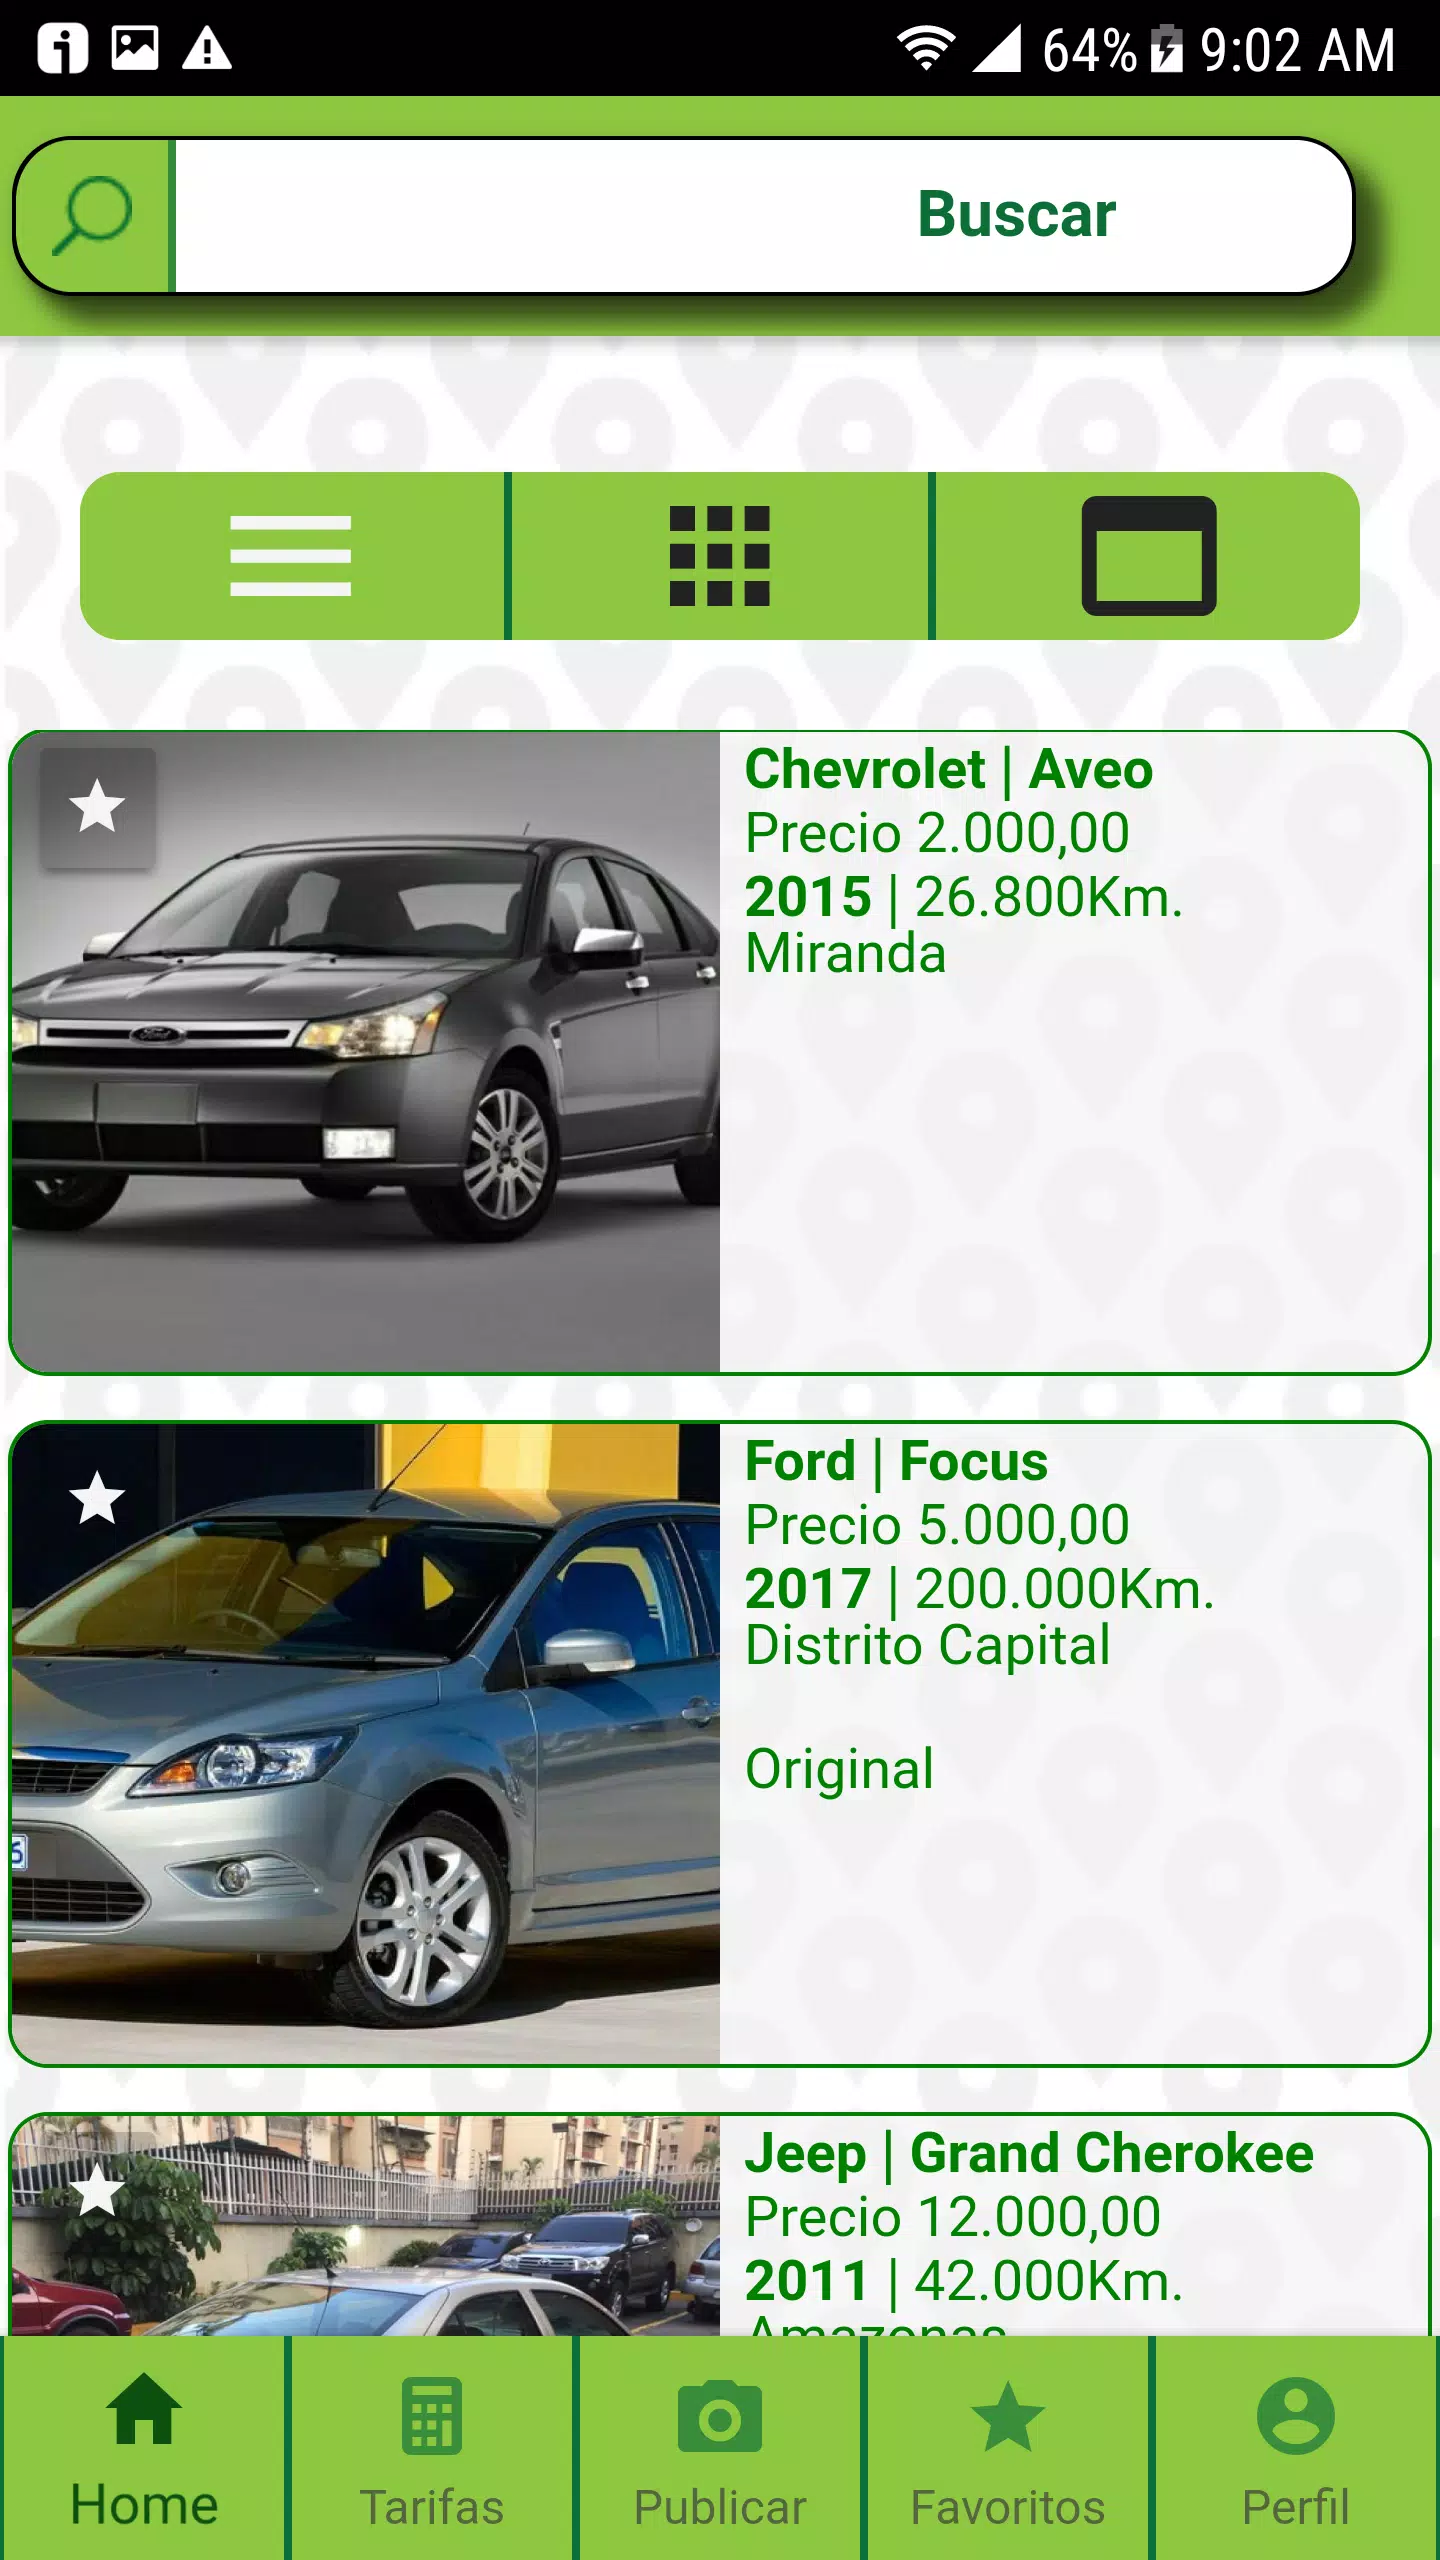 Compra tu carro for Android - APK Download